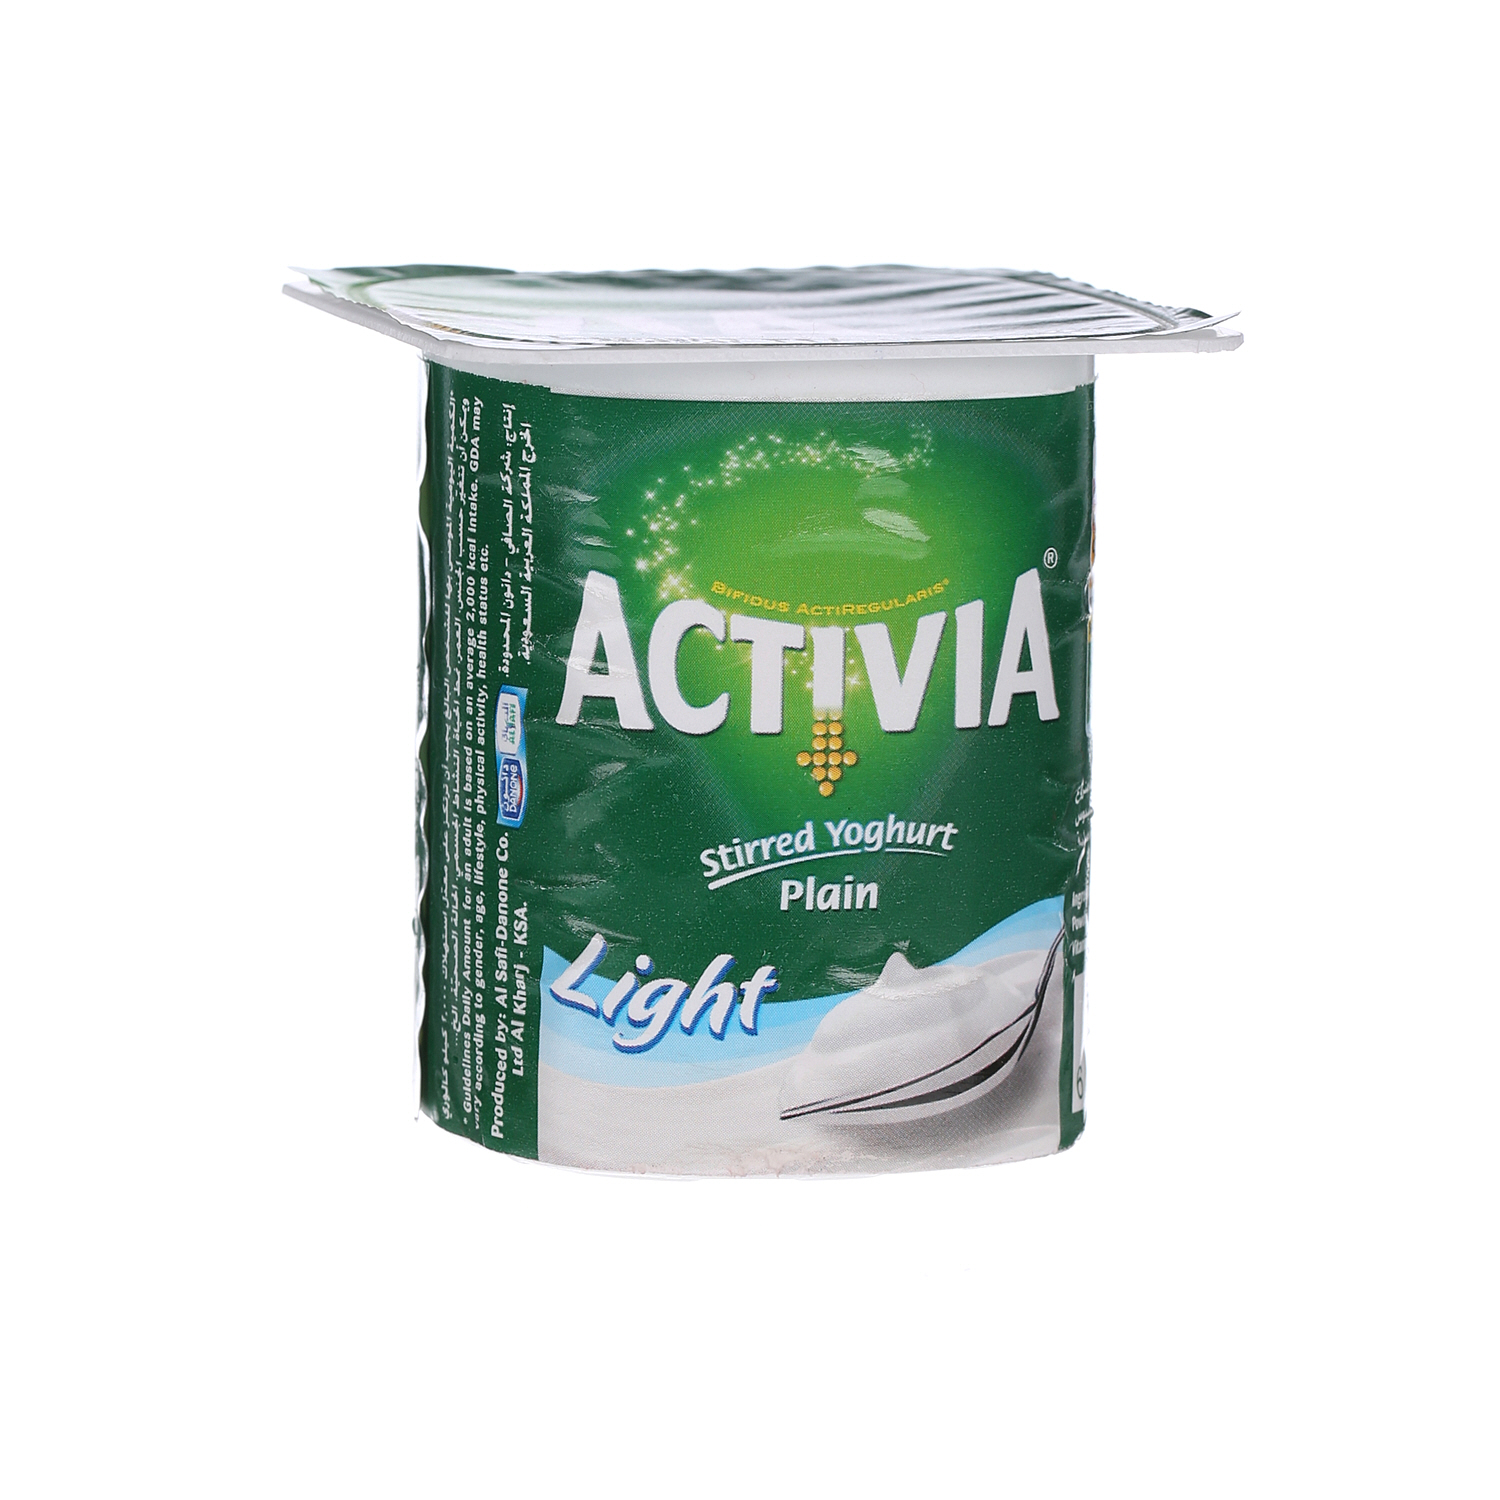 Al Safi Danone Activia Stirred Yoghurt Plain 125 g